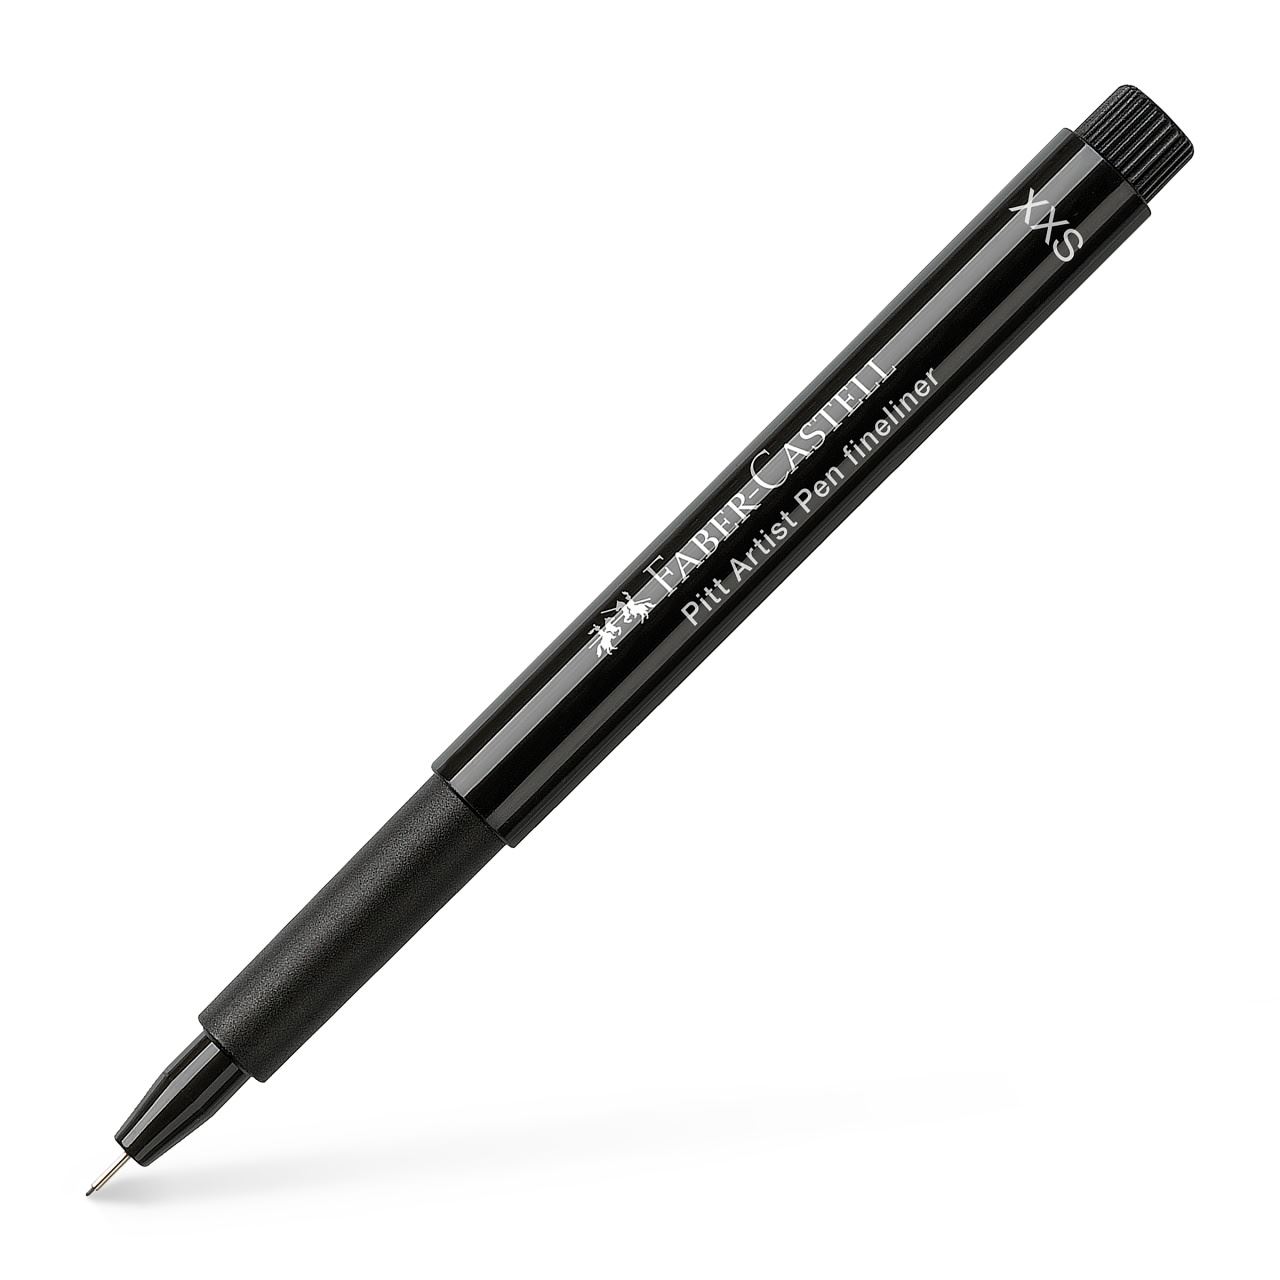 Faber-Castell - Pitt Artist Pen Fineliner XXS India ink pen, black